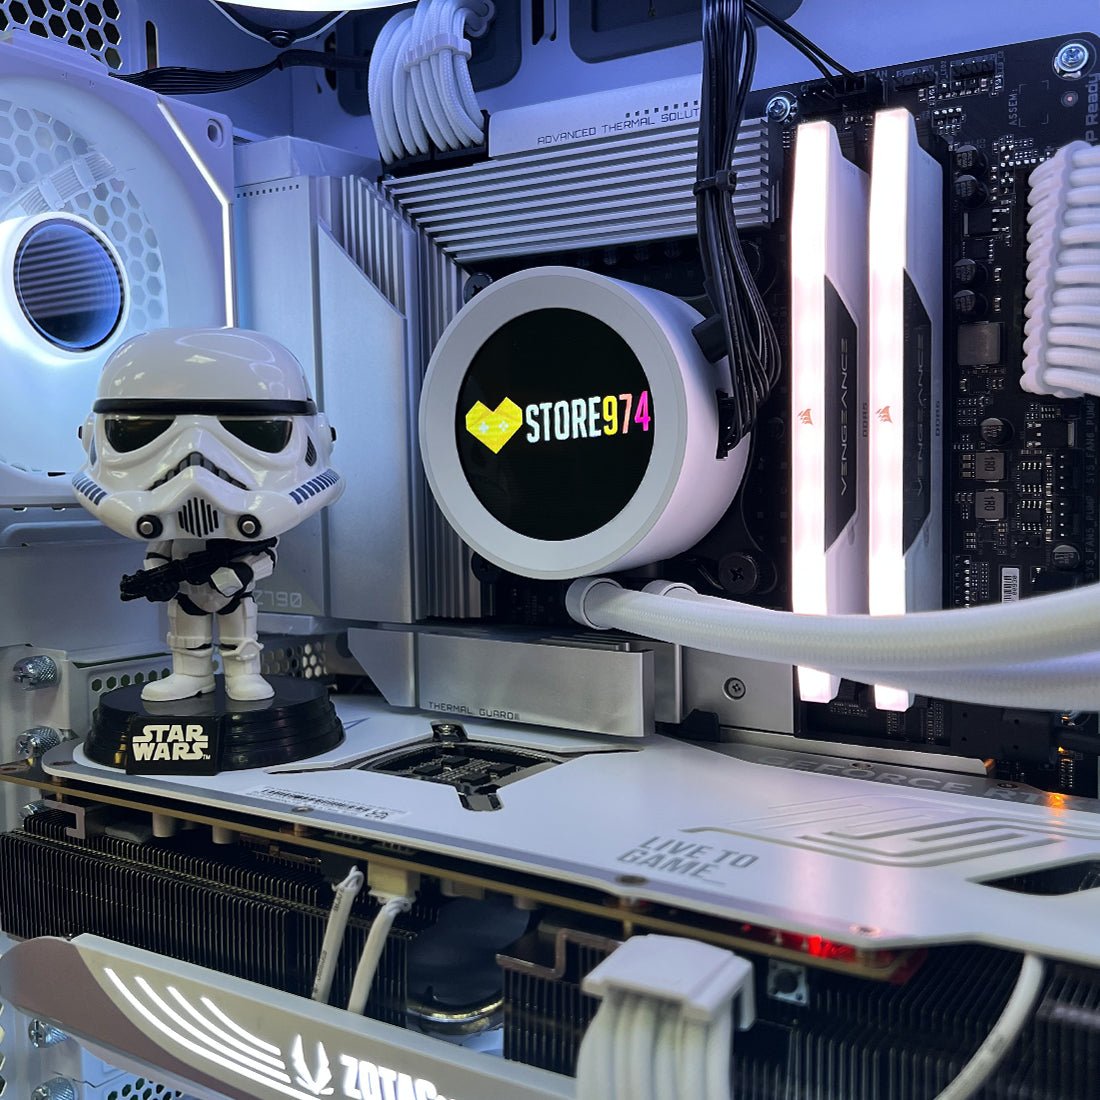 Stormtrooper Build | كمبيوتر ستورمتروبر - Store 974 | ستور ٩٧٤